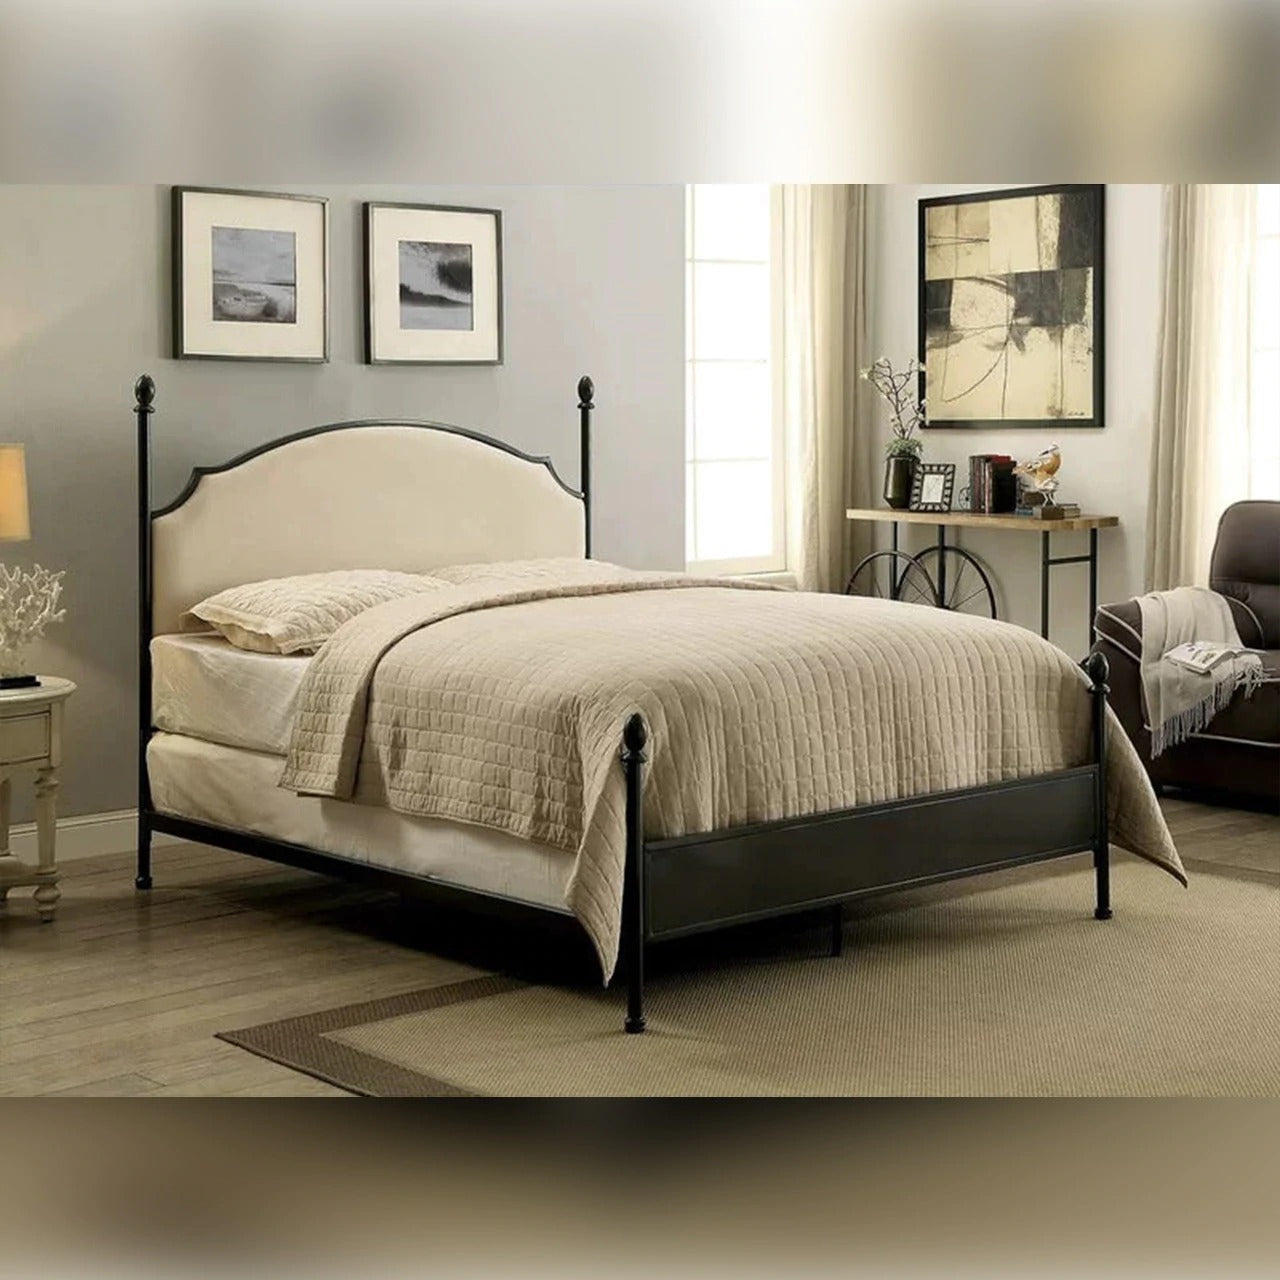 Steel Bed, Iron Bed, Metal Bed, Steel Cot, Steel Bed Price